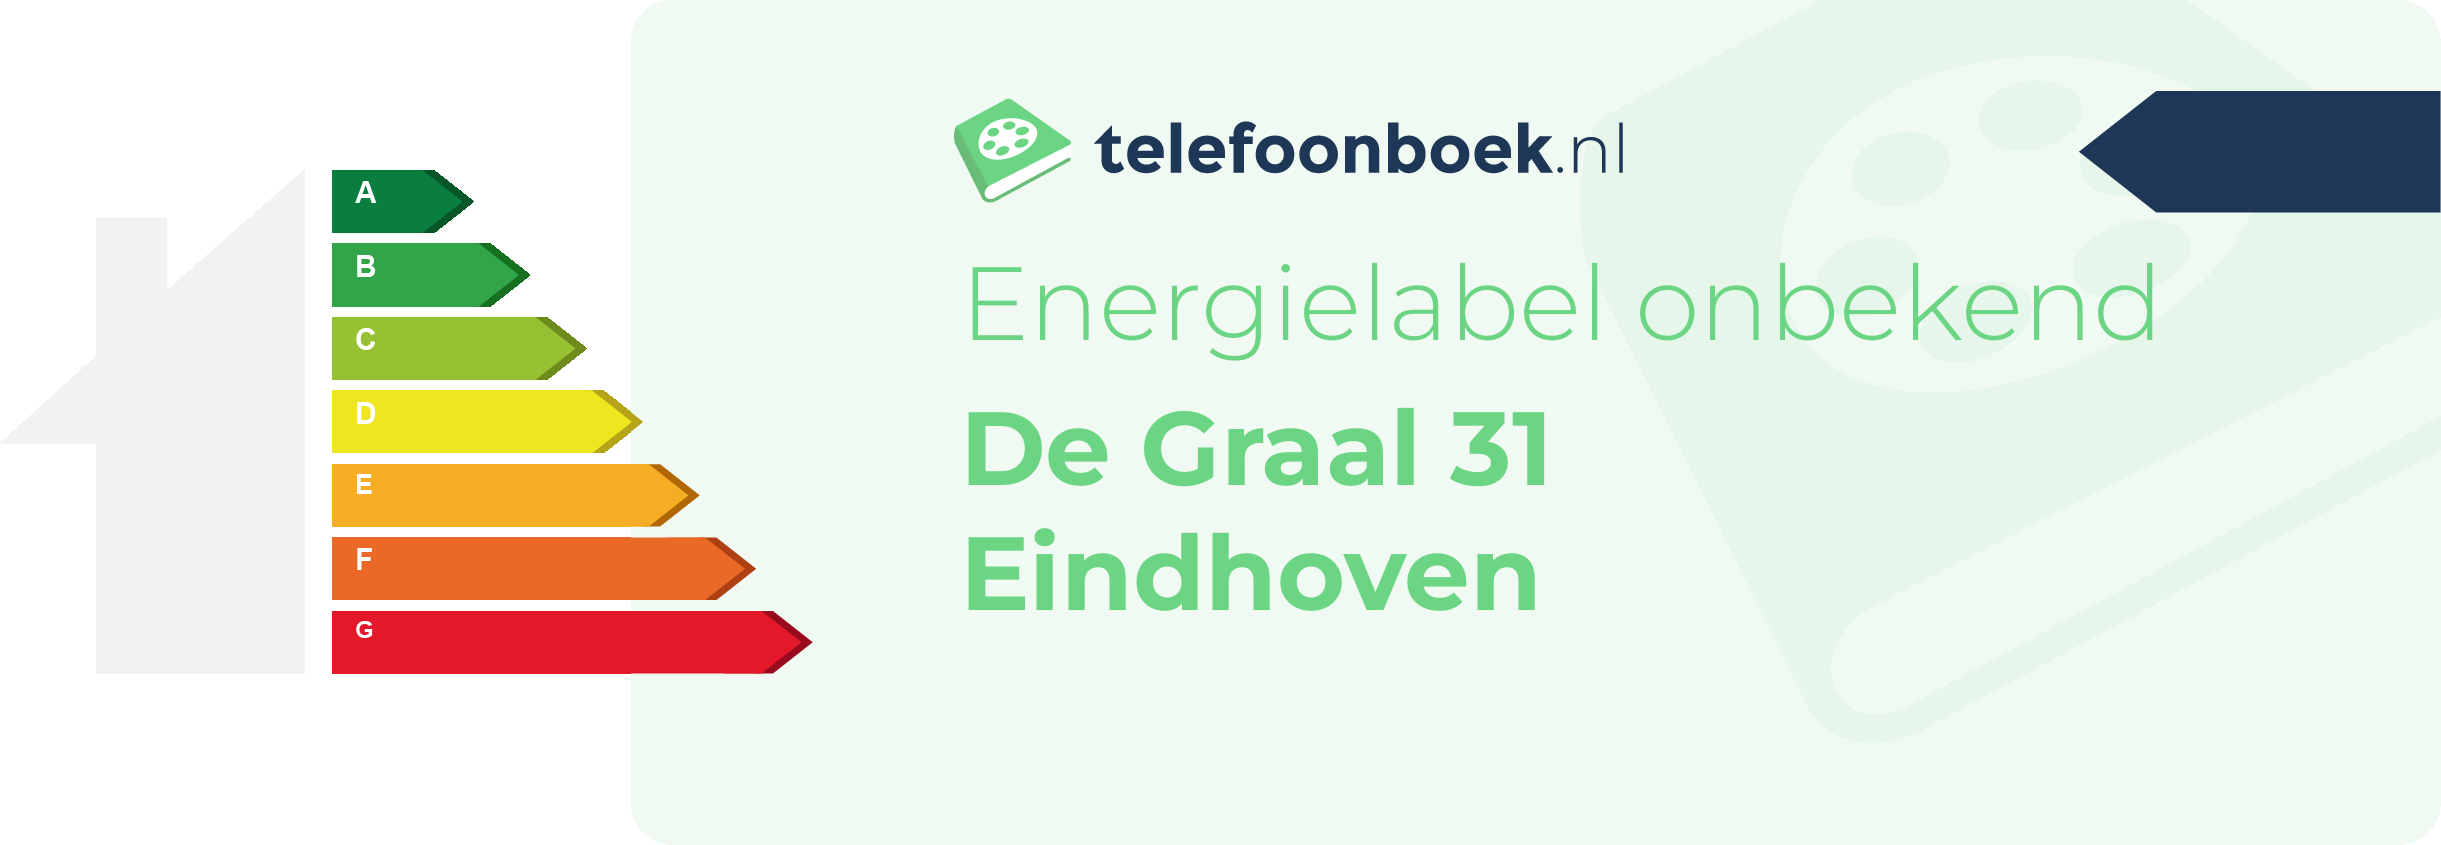 Energielabel De Graal 31 Eindhoven